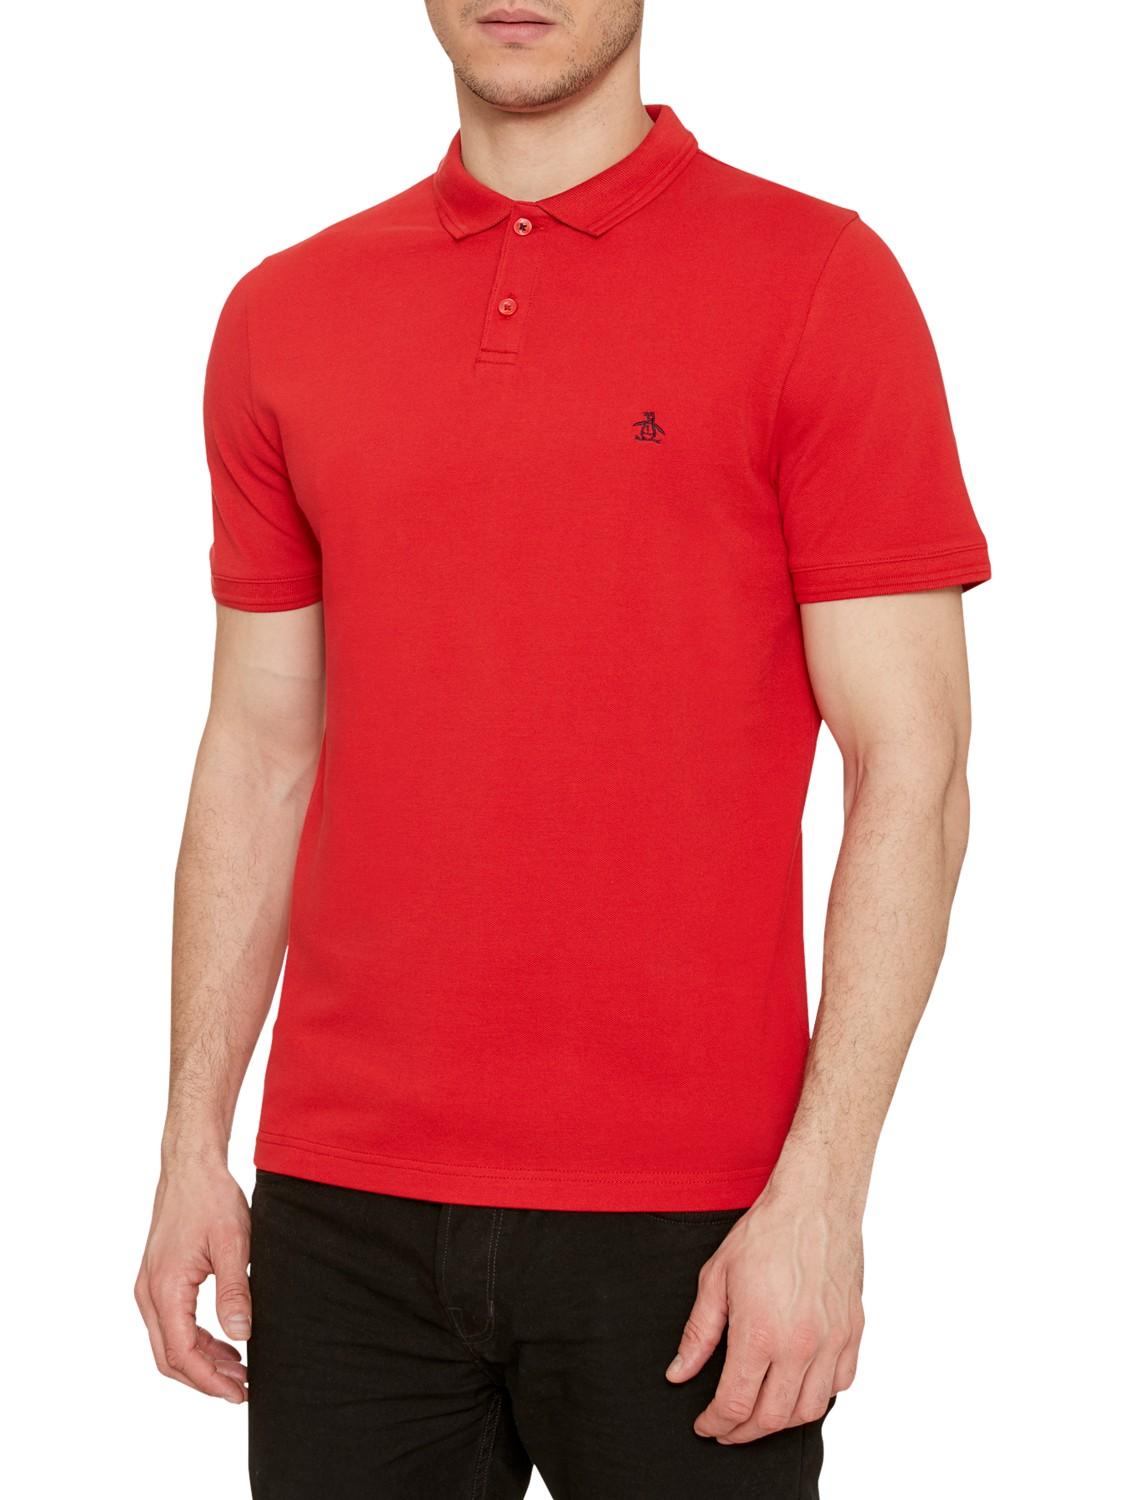 Original Penguin Cotton Winston Pique Polo Shirt in Red for Men - Lyst